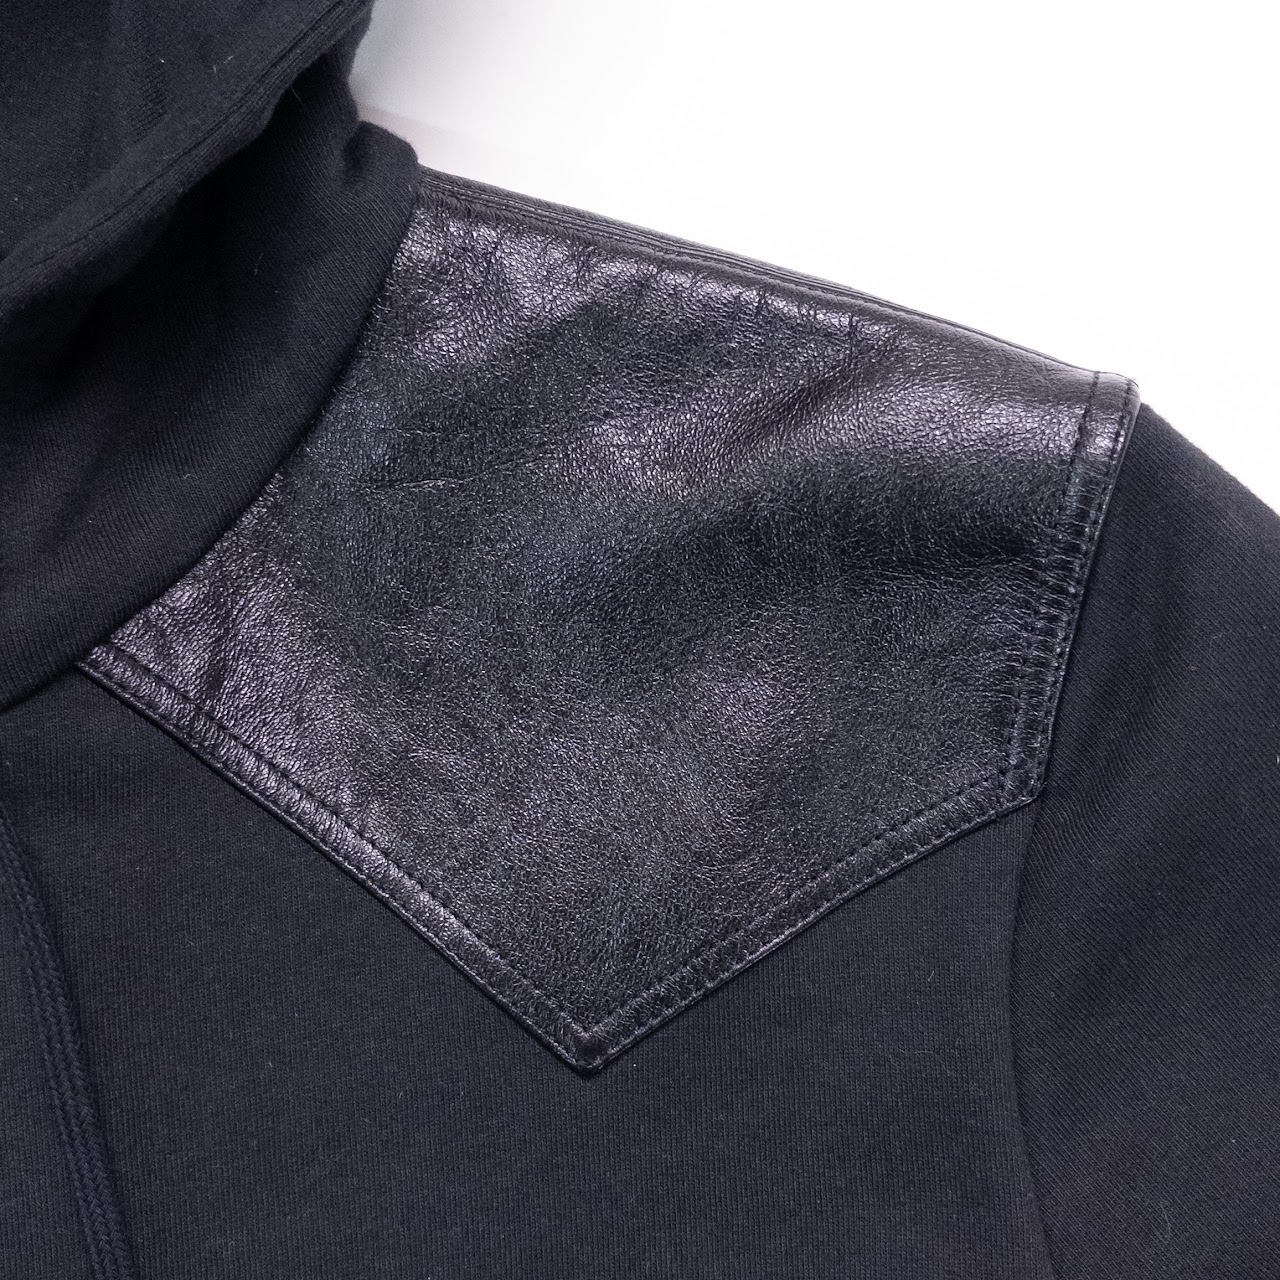 Saint Laurent Leather Trimmed Zip Up Hoodie